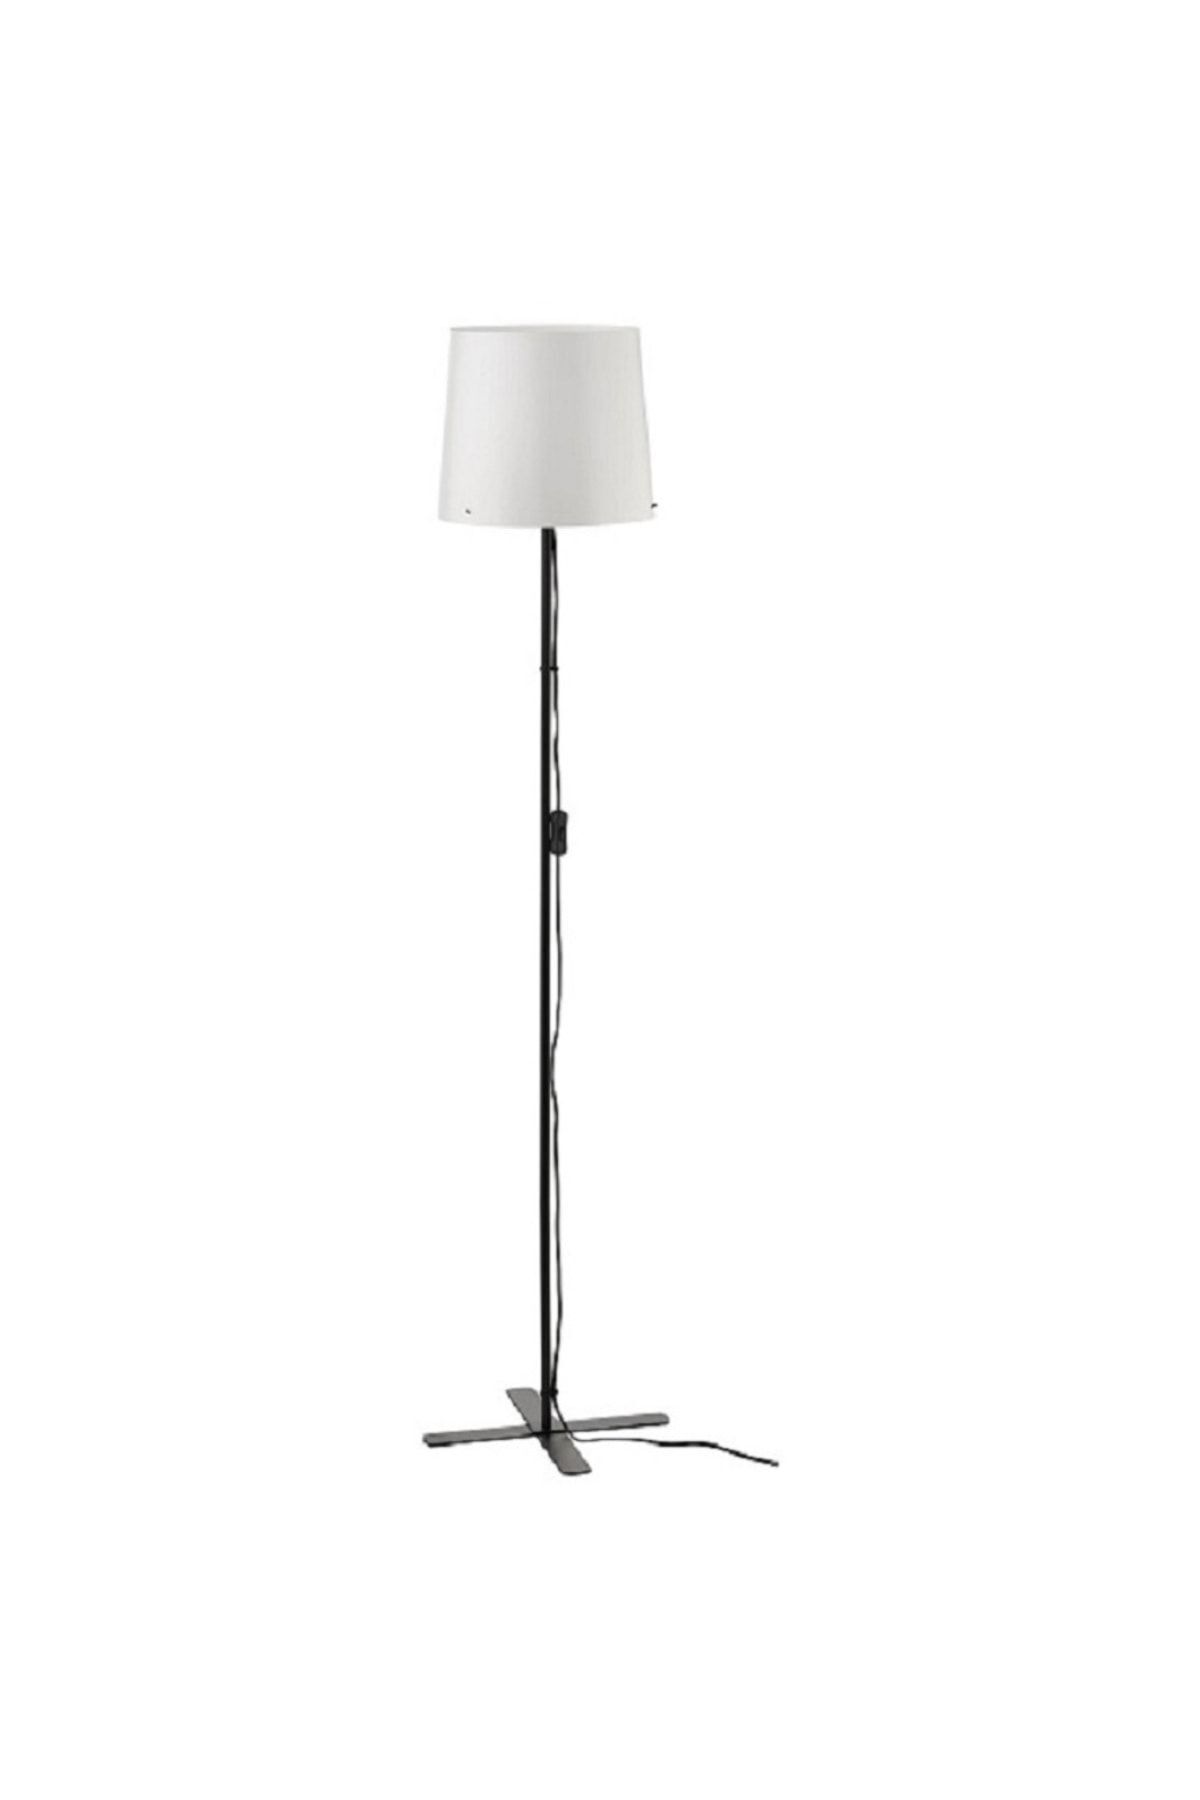 IKEA Barlast 150 Cm Lambader Yer Lambası, Ayaklı Lamba, Lambader - Ereganto